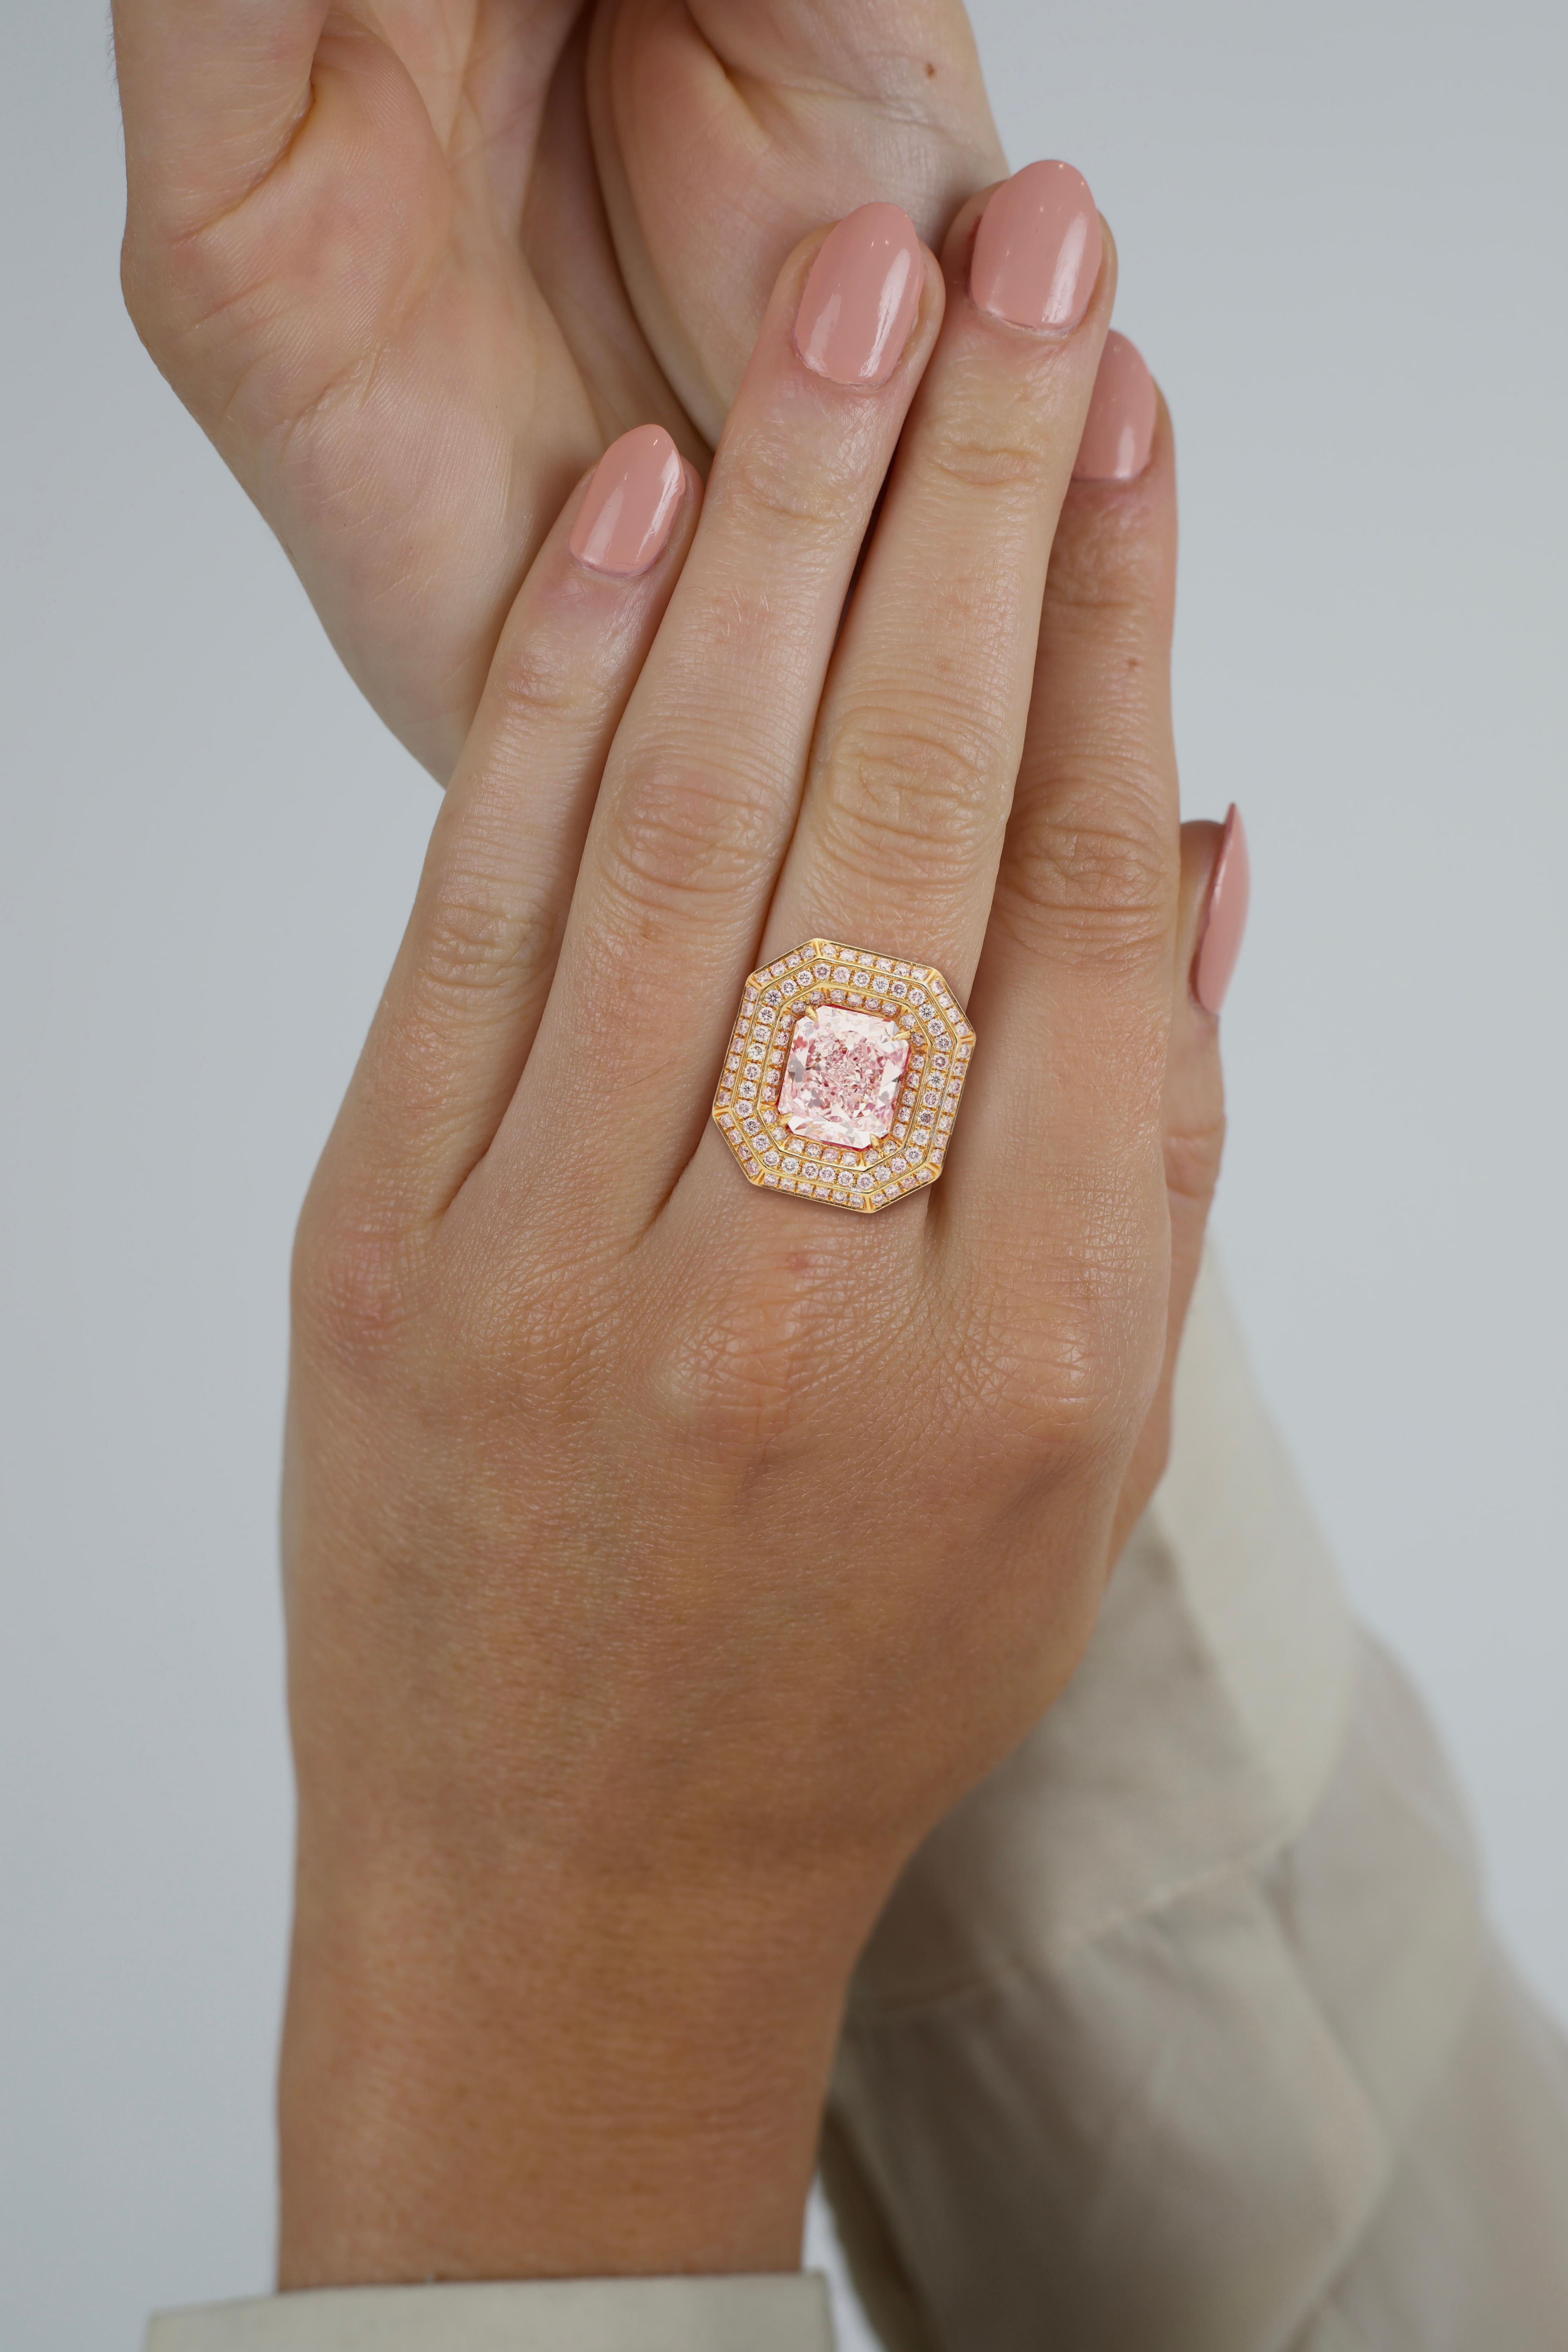 GIA Certified 3.48 Carat Radiant Cut Fancy Light Pink Diamond Ring in 18k  For Sale 2